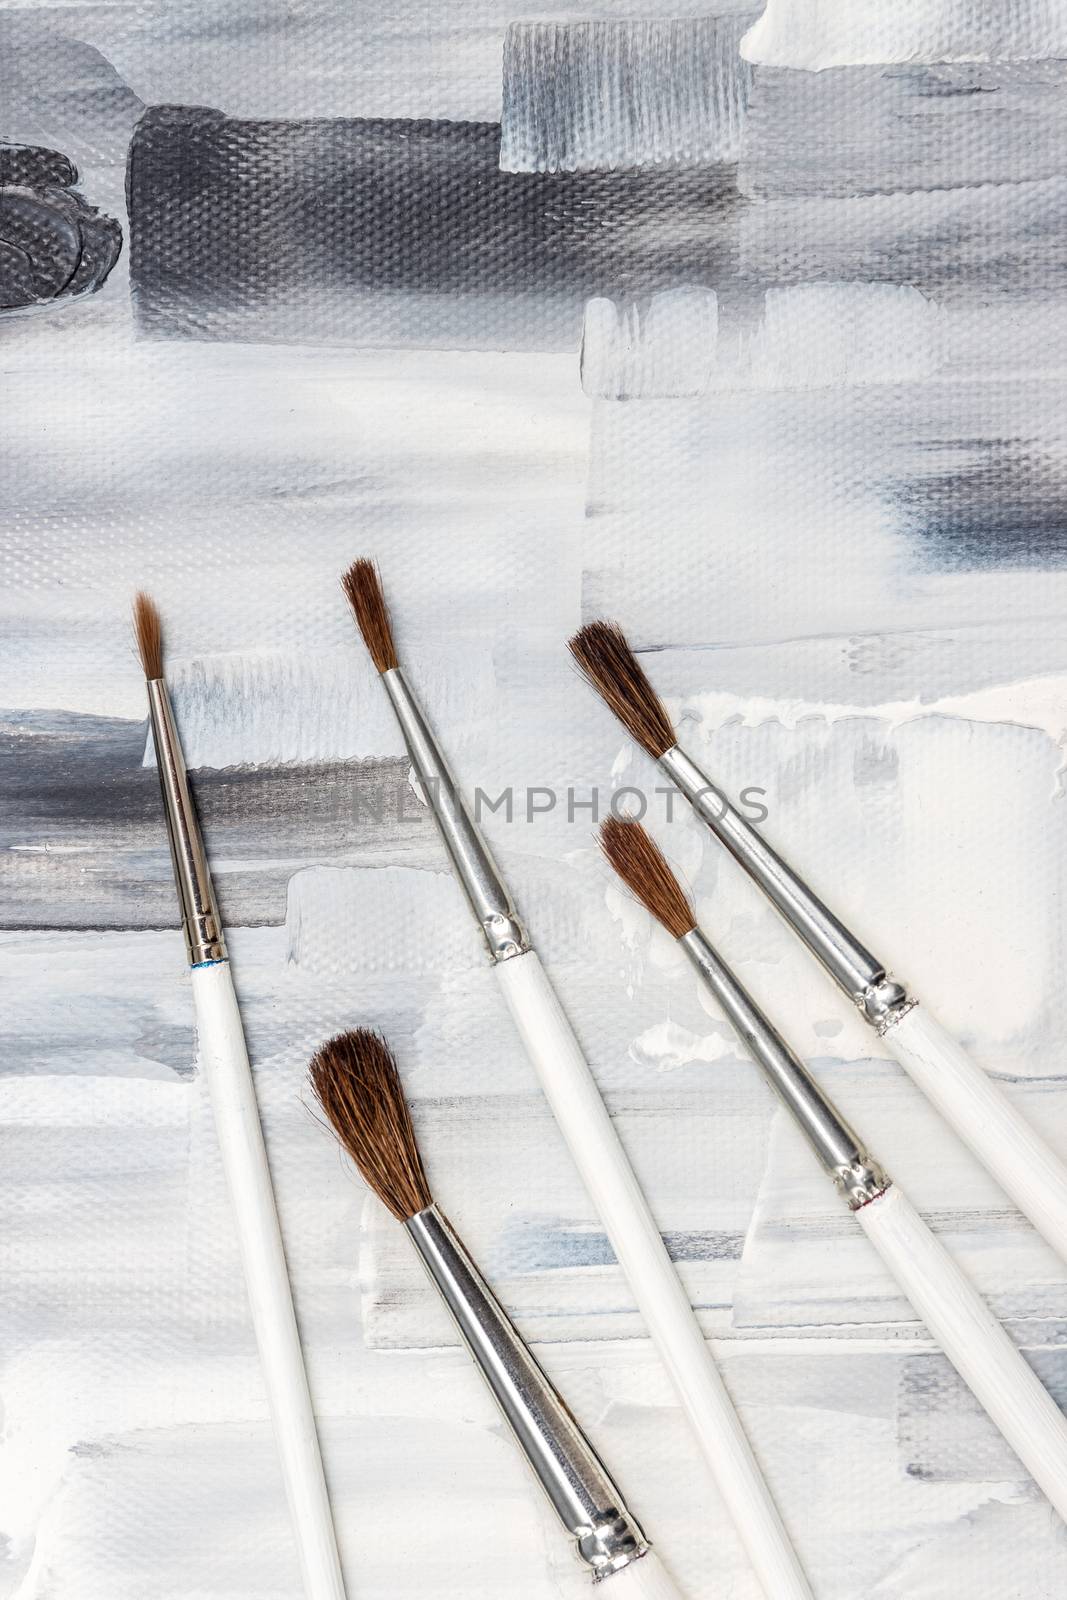 Paint brushes on artistic background. Black and white brush strokes.